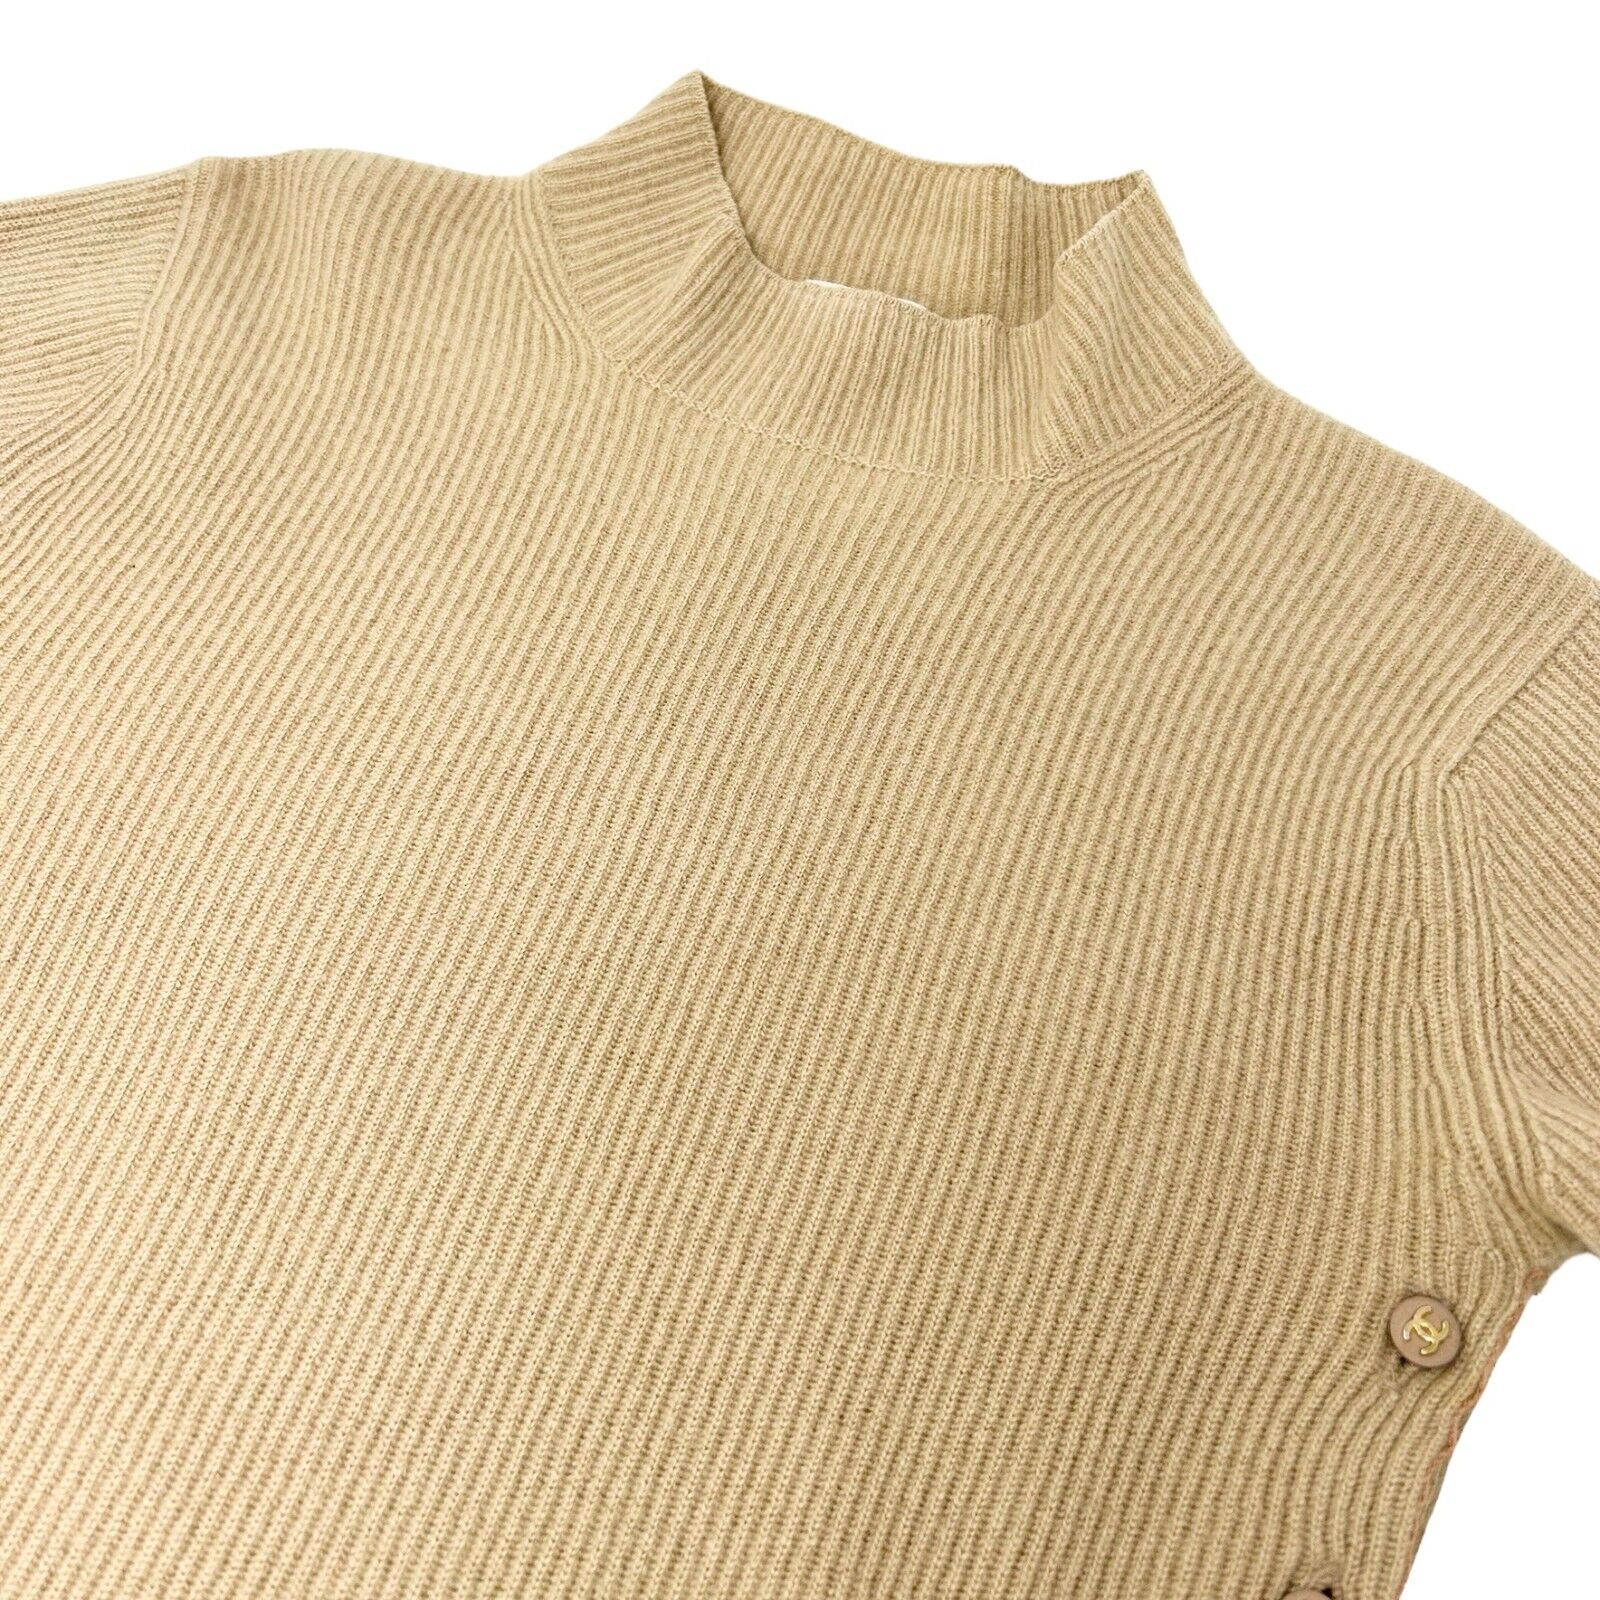 CHANEL Vintage Coco Mark Logo Rib Knit Top Sweater Cashmere Mock Neck RankAB